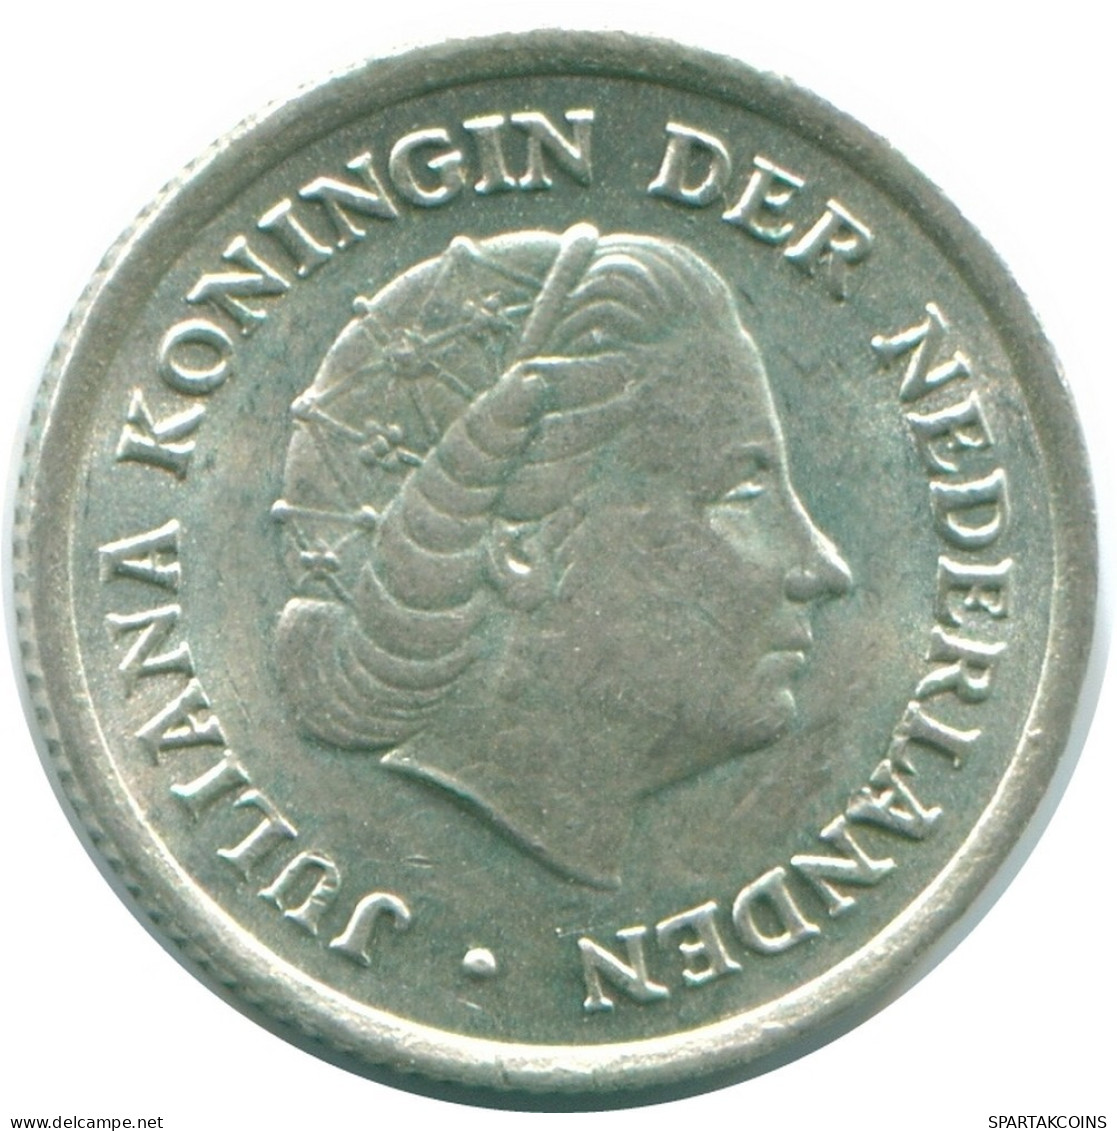 1/10 GULDEN 1966 NIEDERLÄNDISCHE ANTILLEN SILBER Koloniale Münze #NL12743.3.D.A - Netherlands Antilles